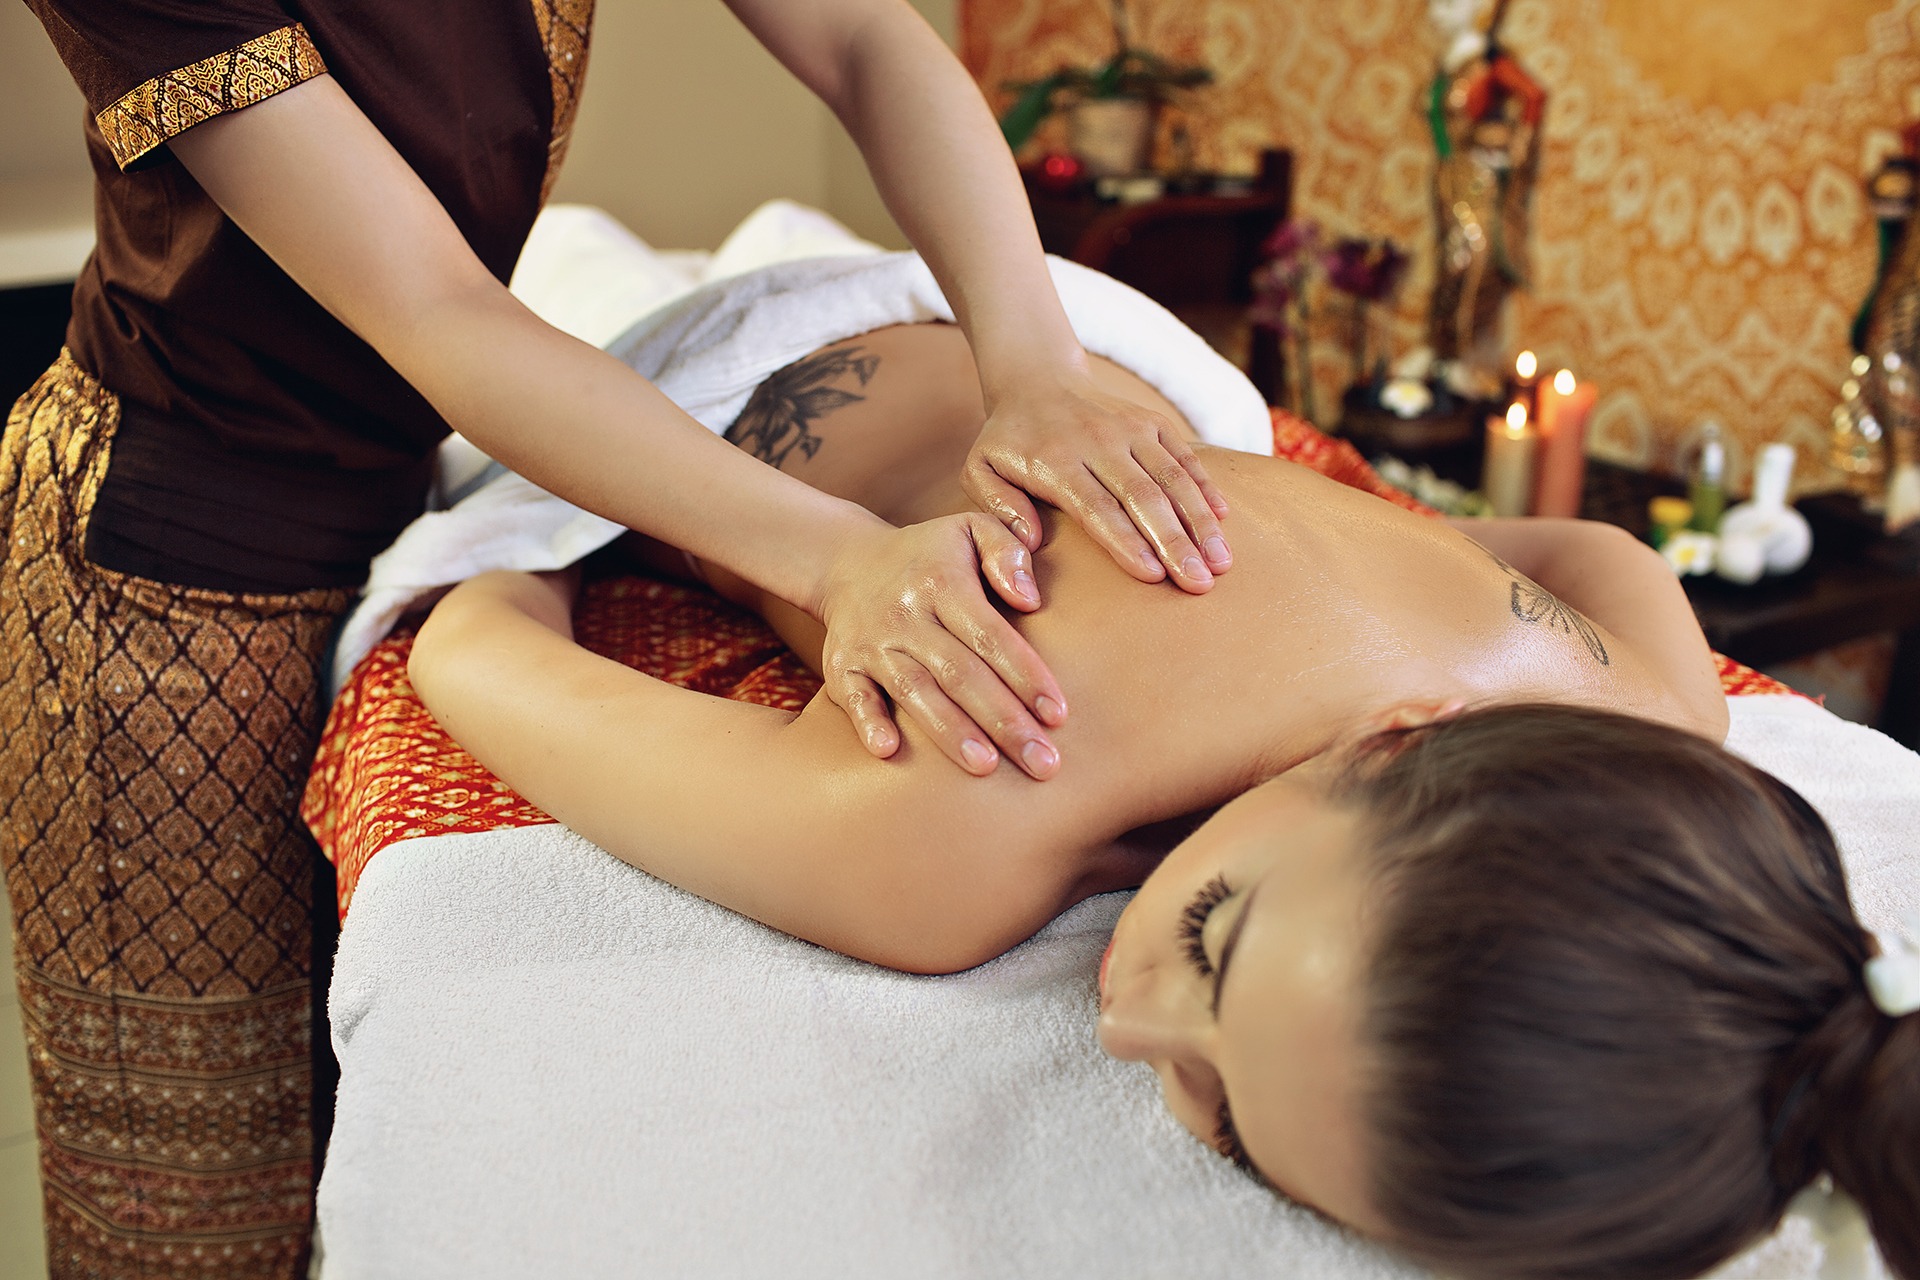 Erotic massage albany ny full body massage therapy abu dhabi sports aviatio...